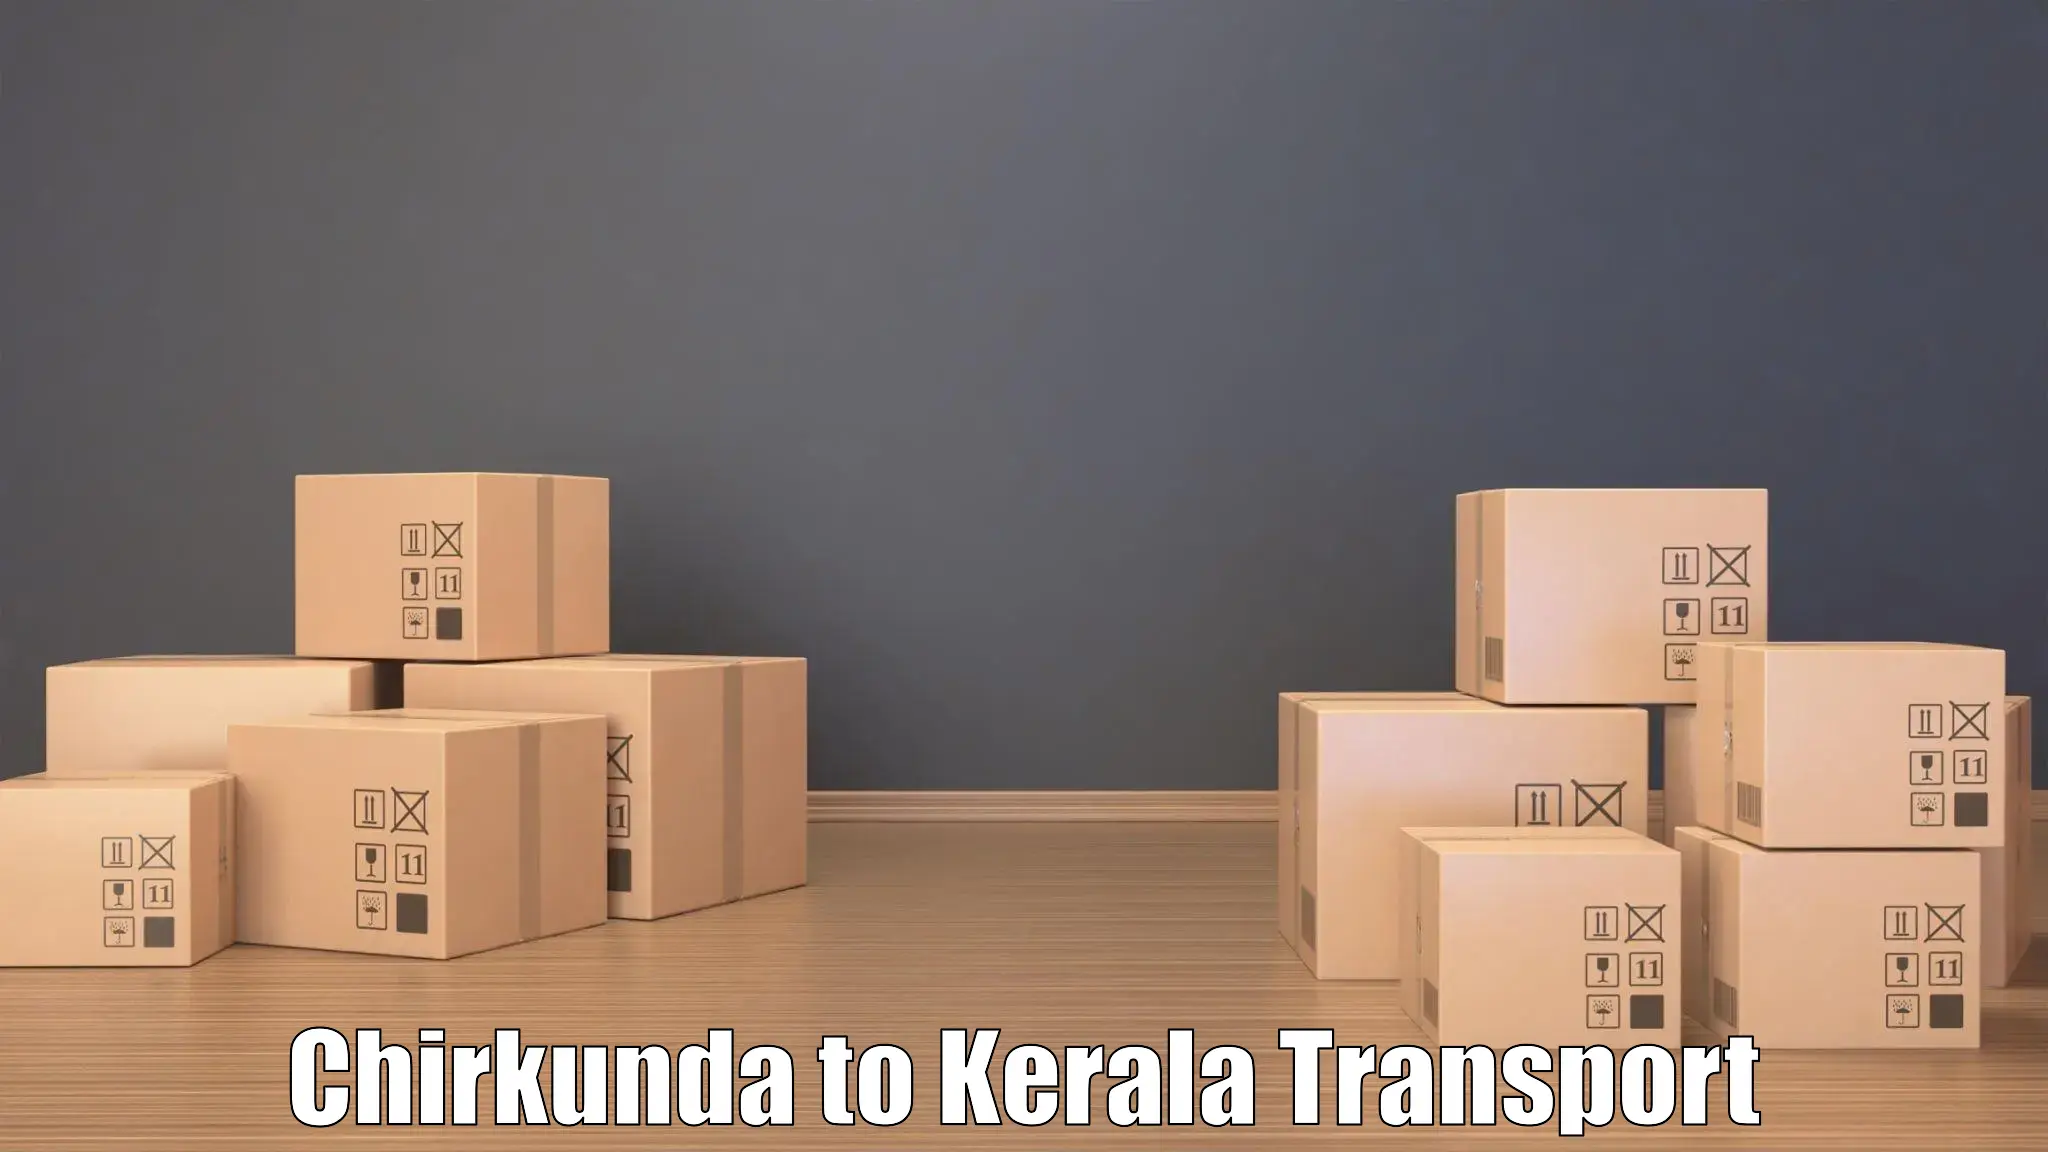 Express transport services Chirkunda to Trivandrum